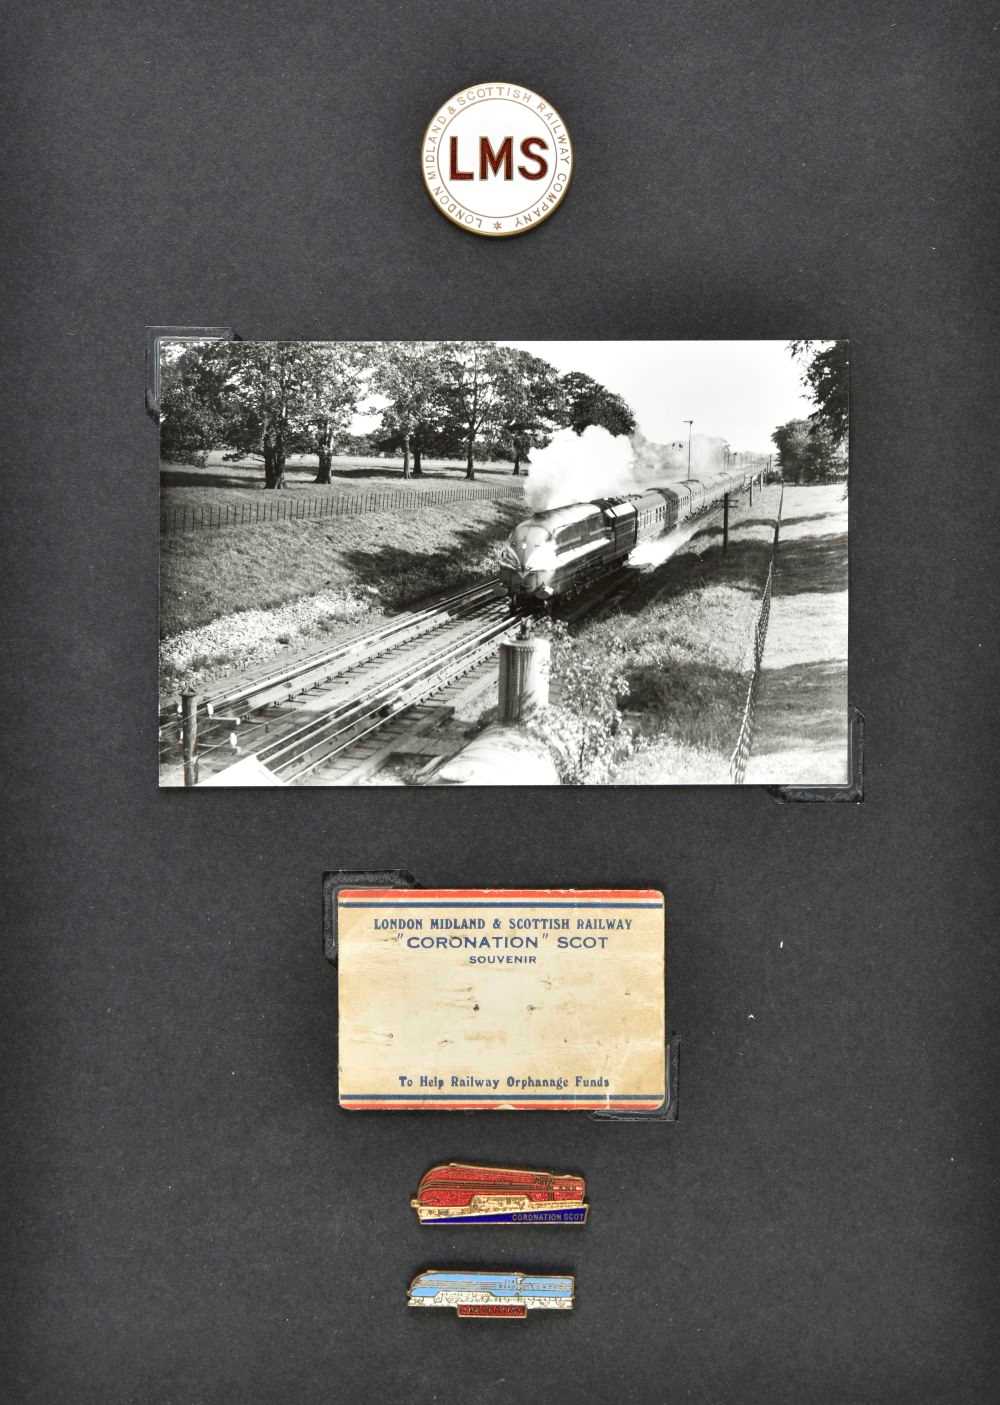 Lot 410 - Railway ephemera. An extensive collection of LMS railway ephemera